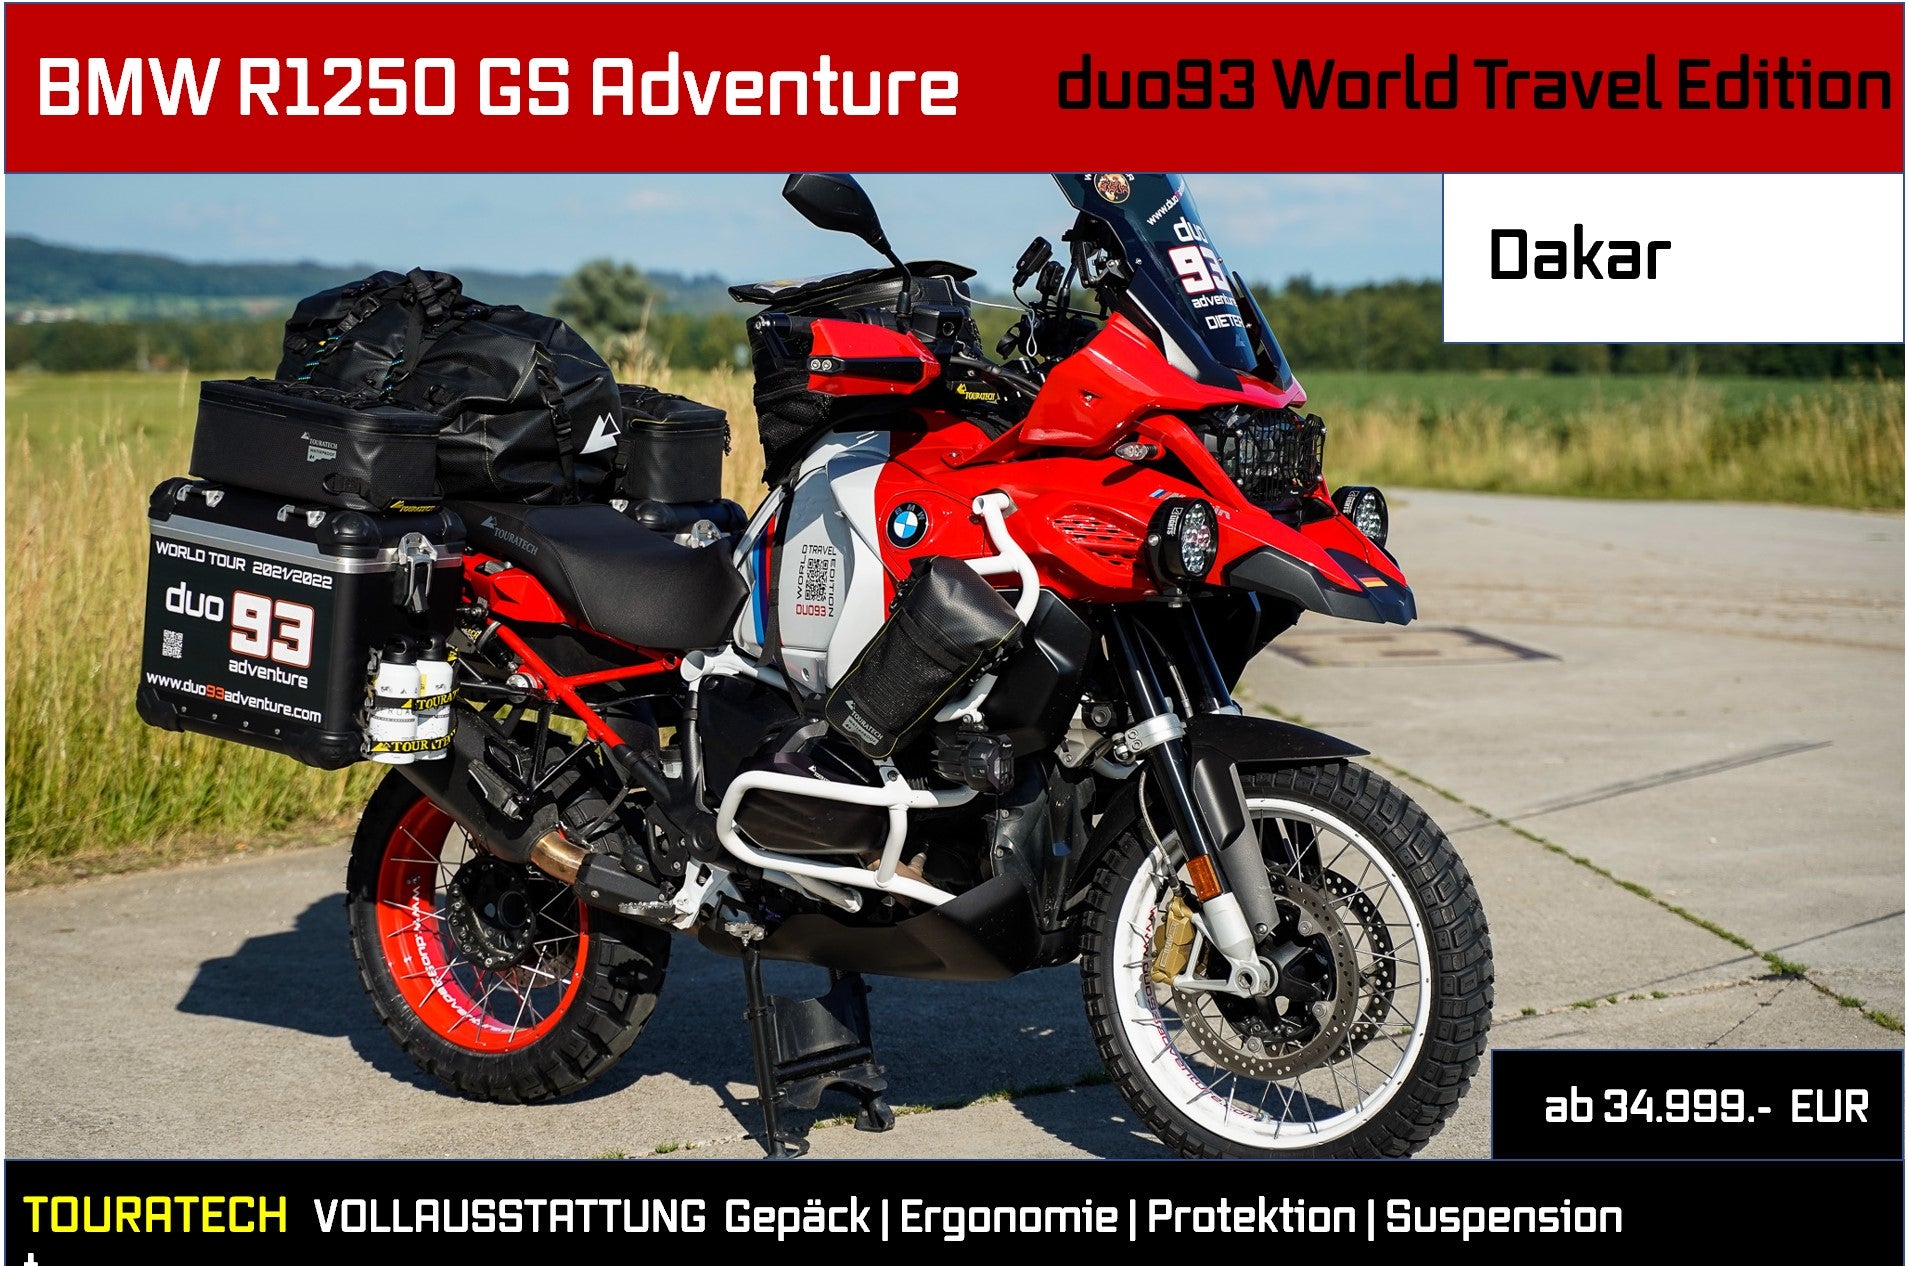 duo93 World Travel Edition